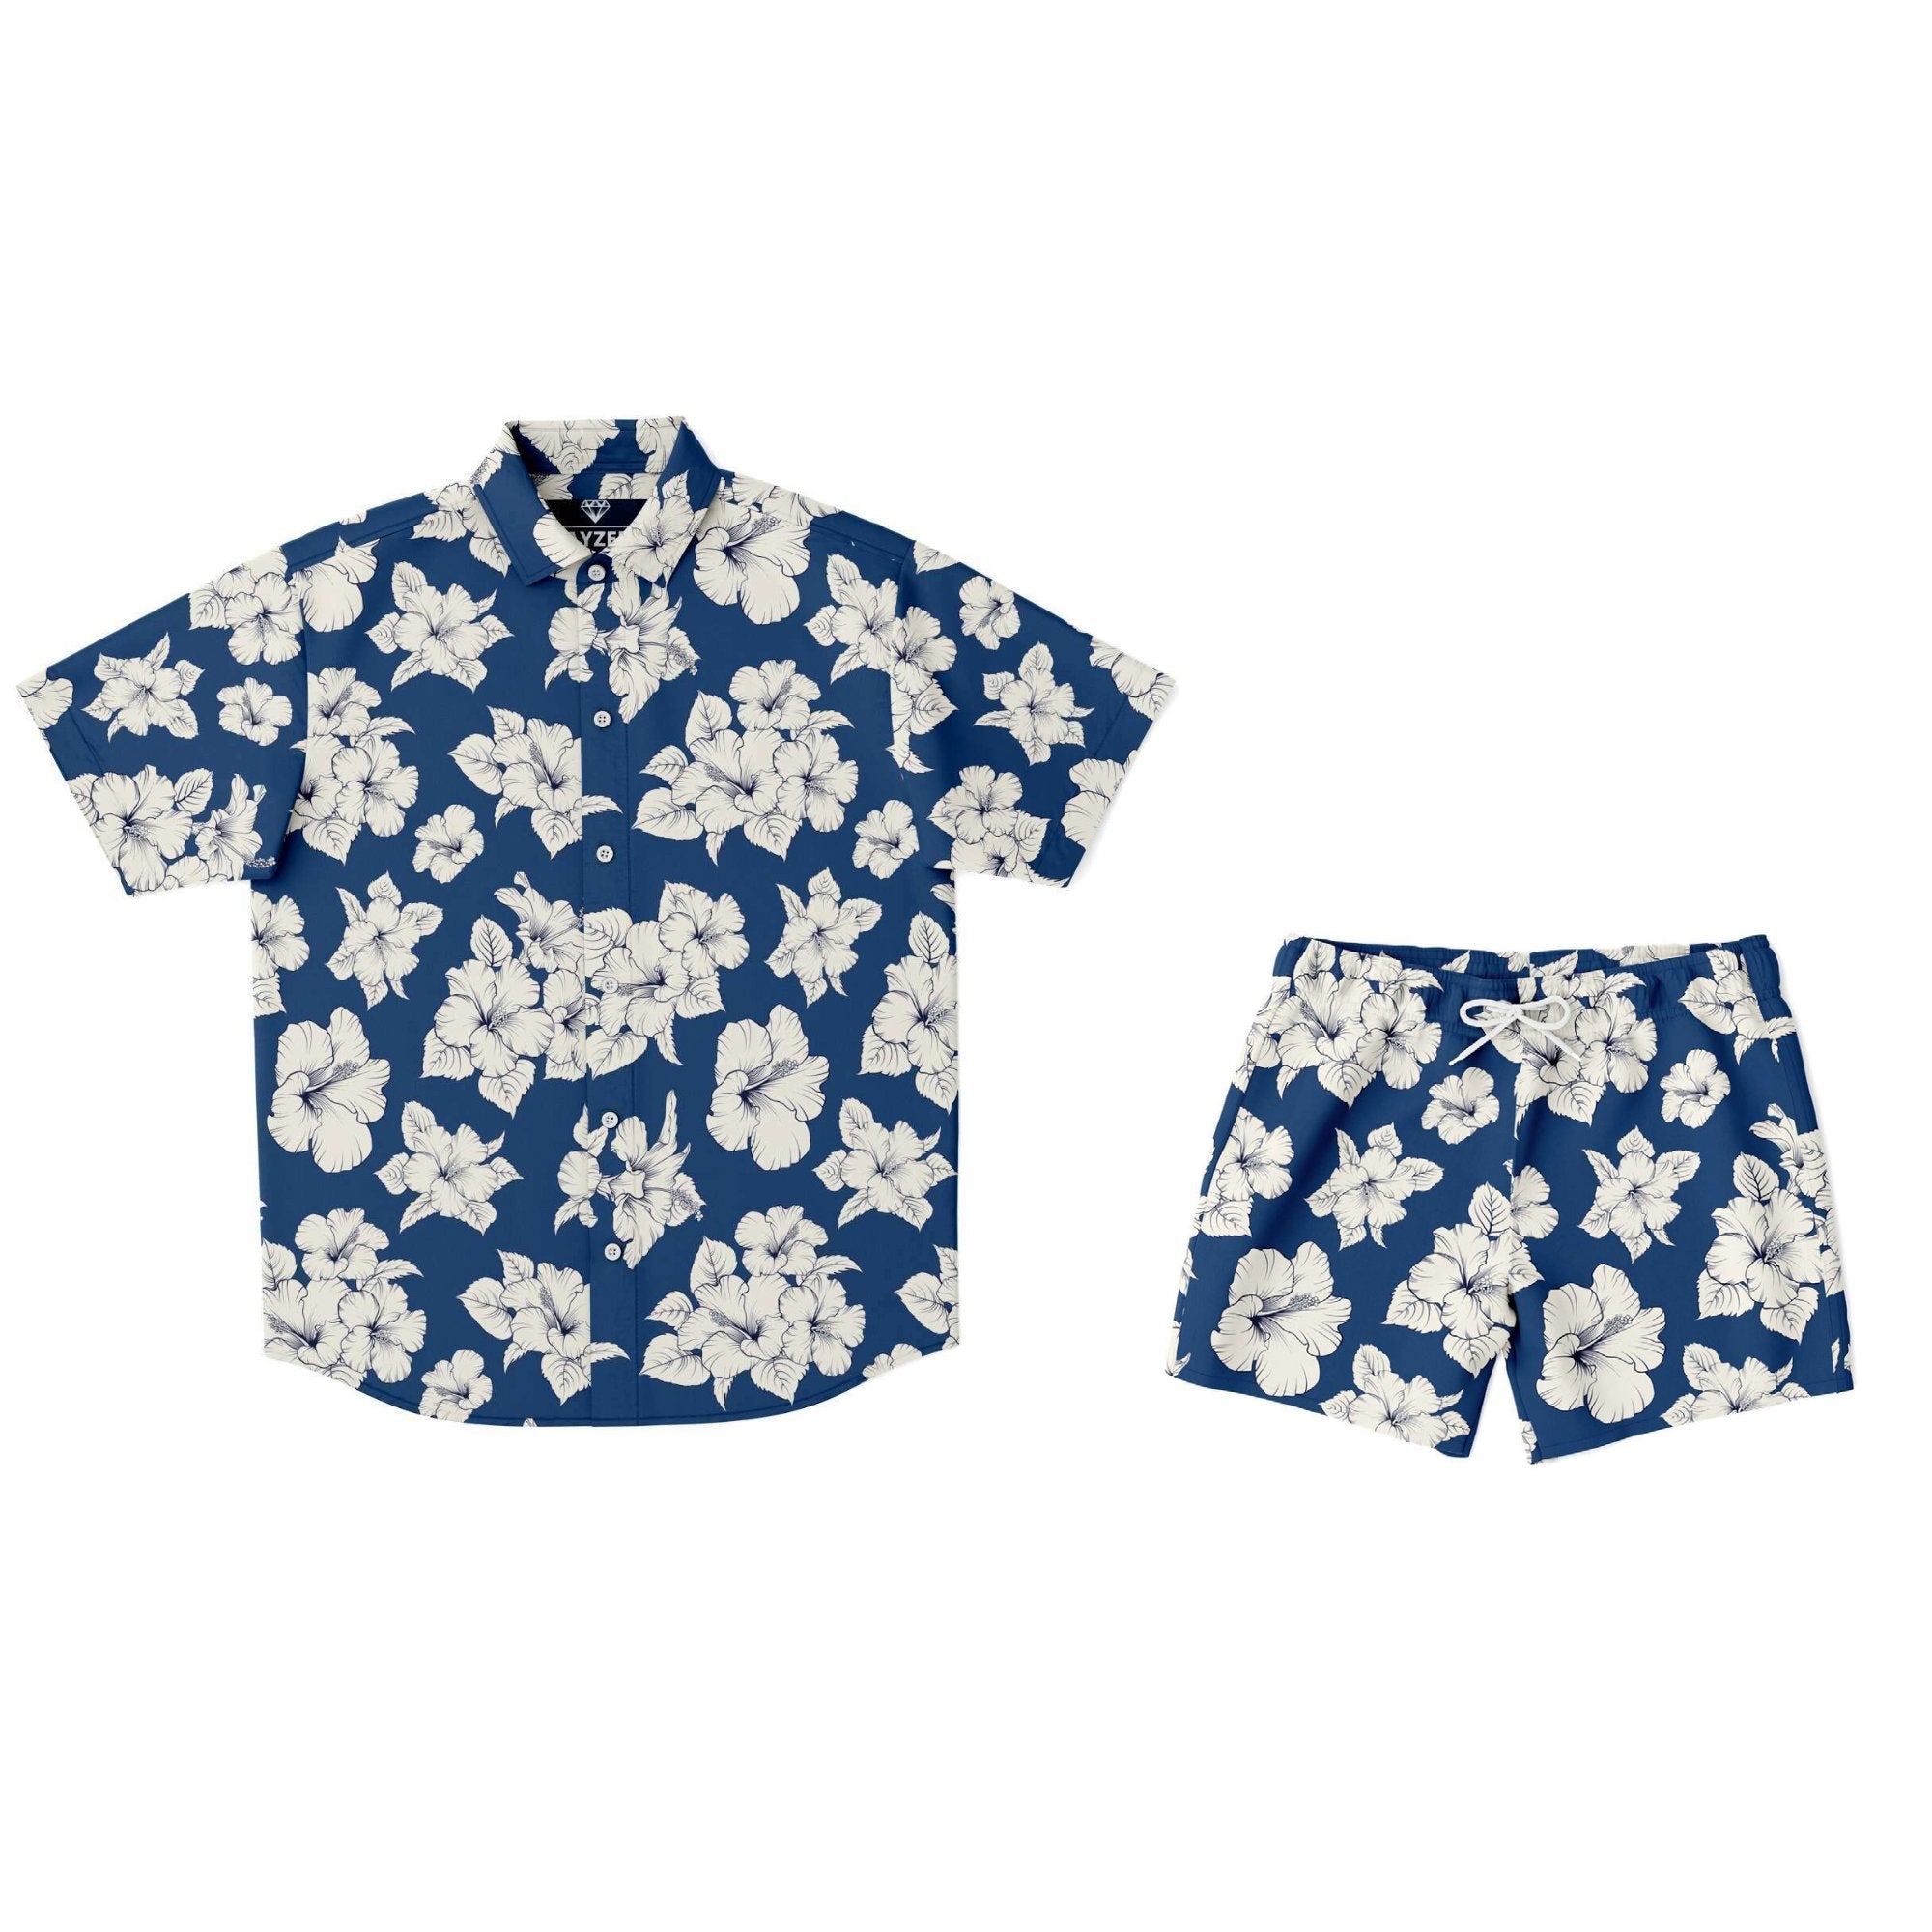 White Hibiscus Flowers Print Floral Tropical Shirt Matching Shirt And Shorts Set, Matching Beach Hawaiian Sets - kayzers